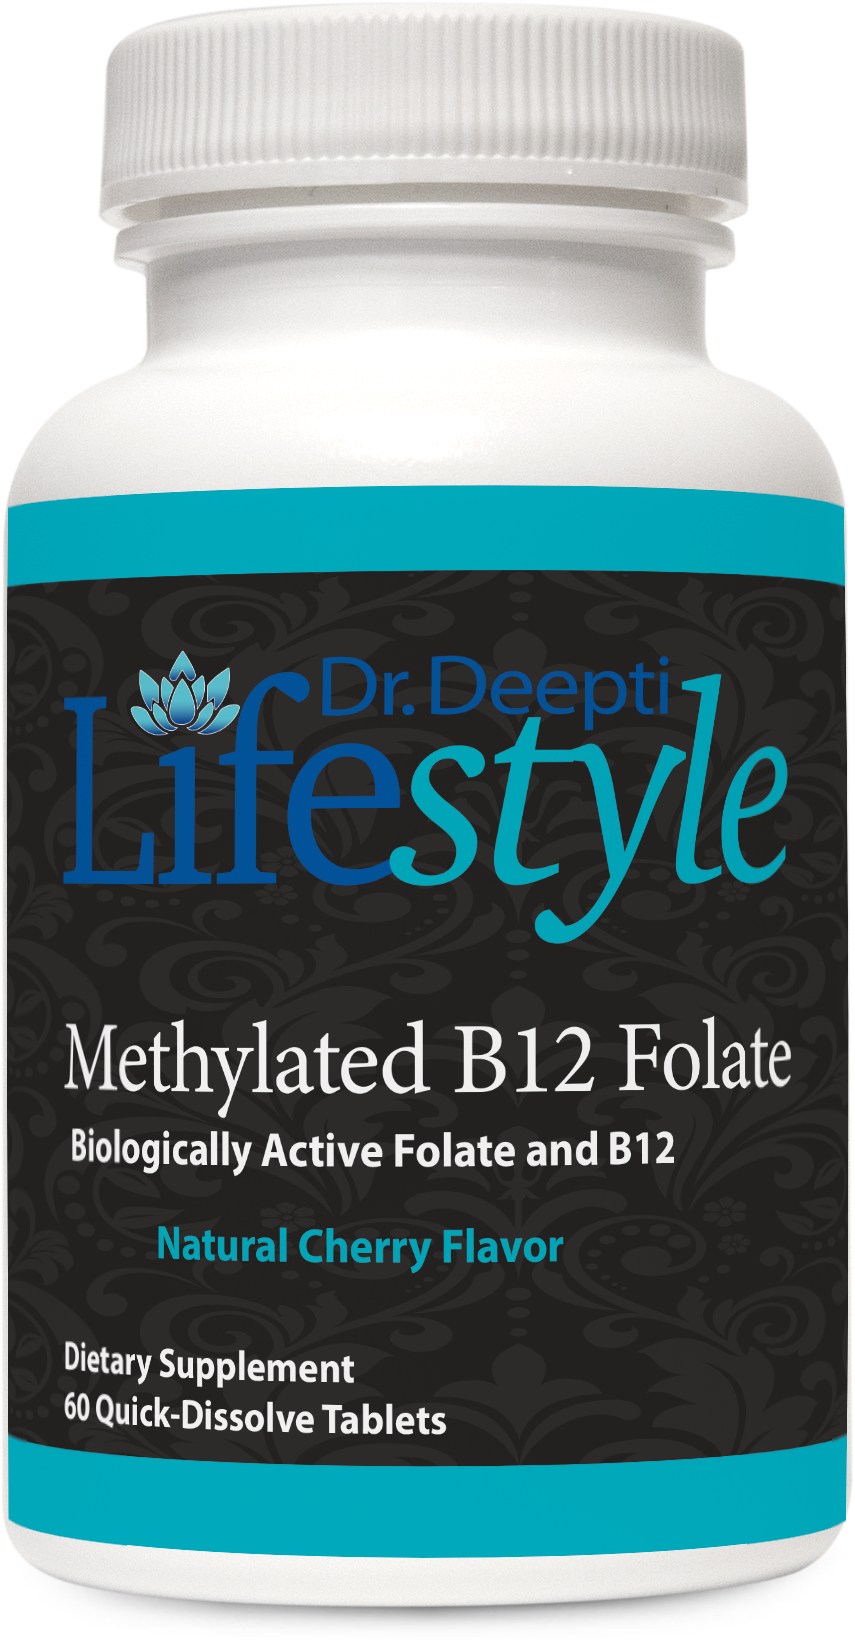 Methylated B12 Folate